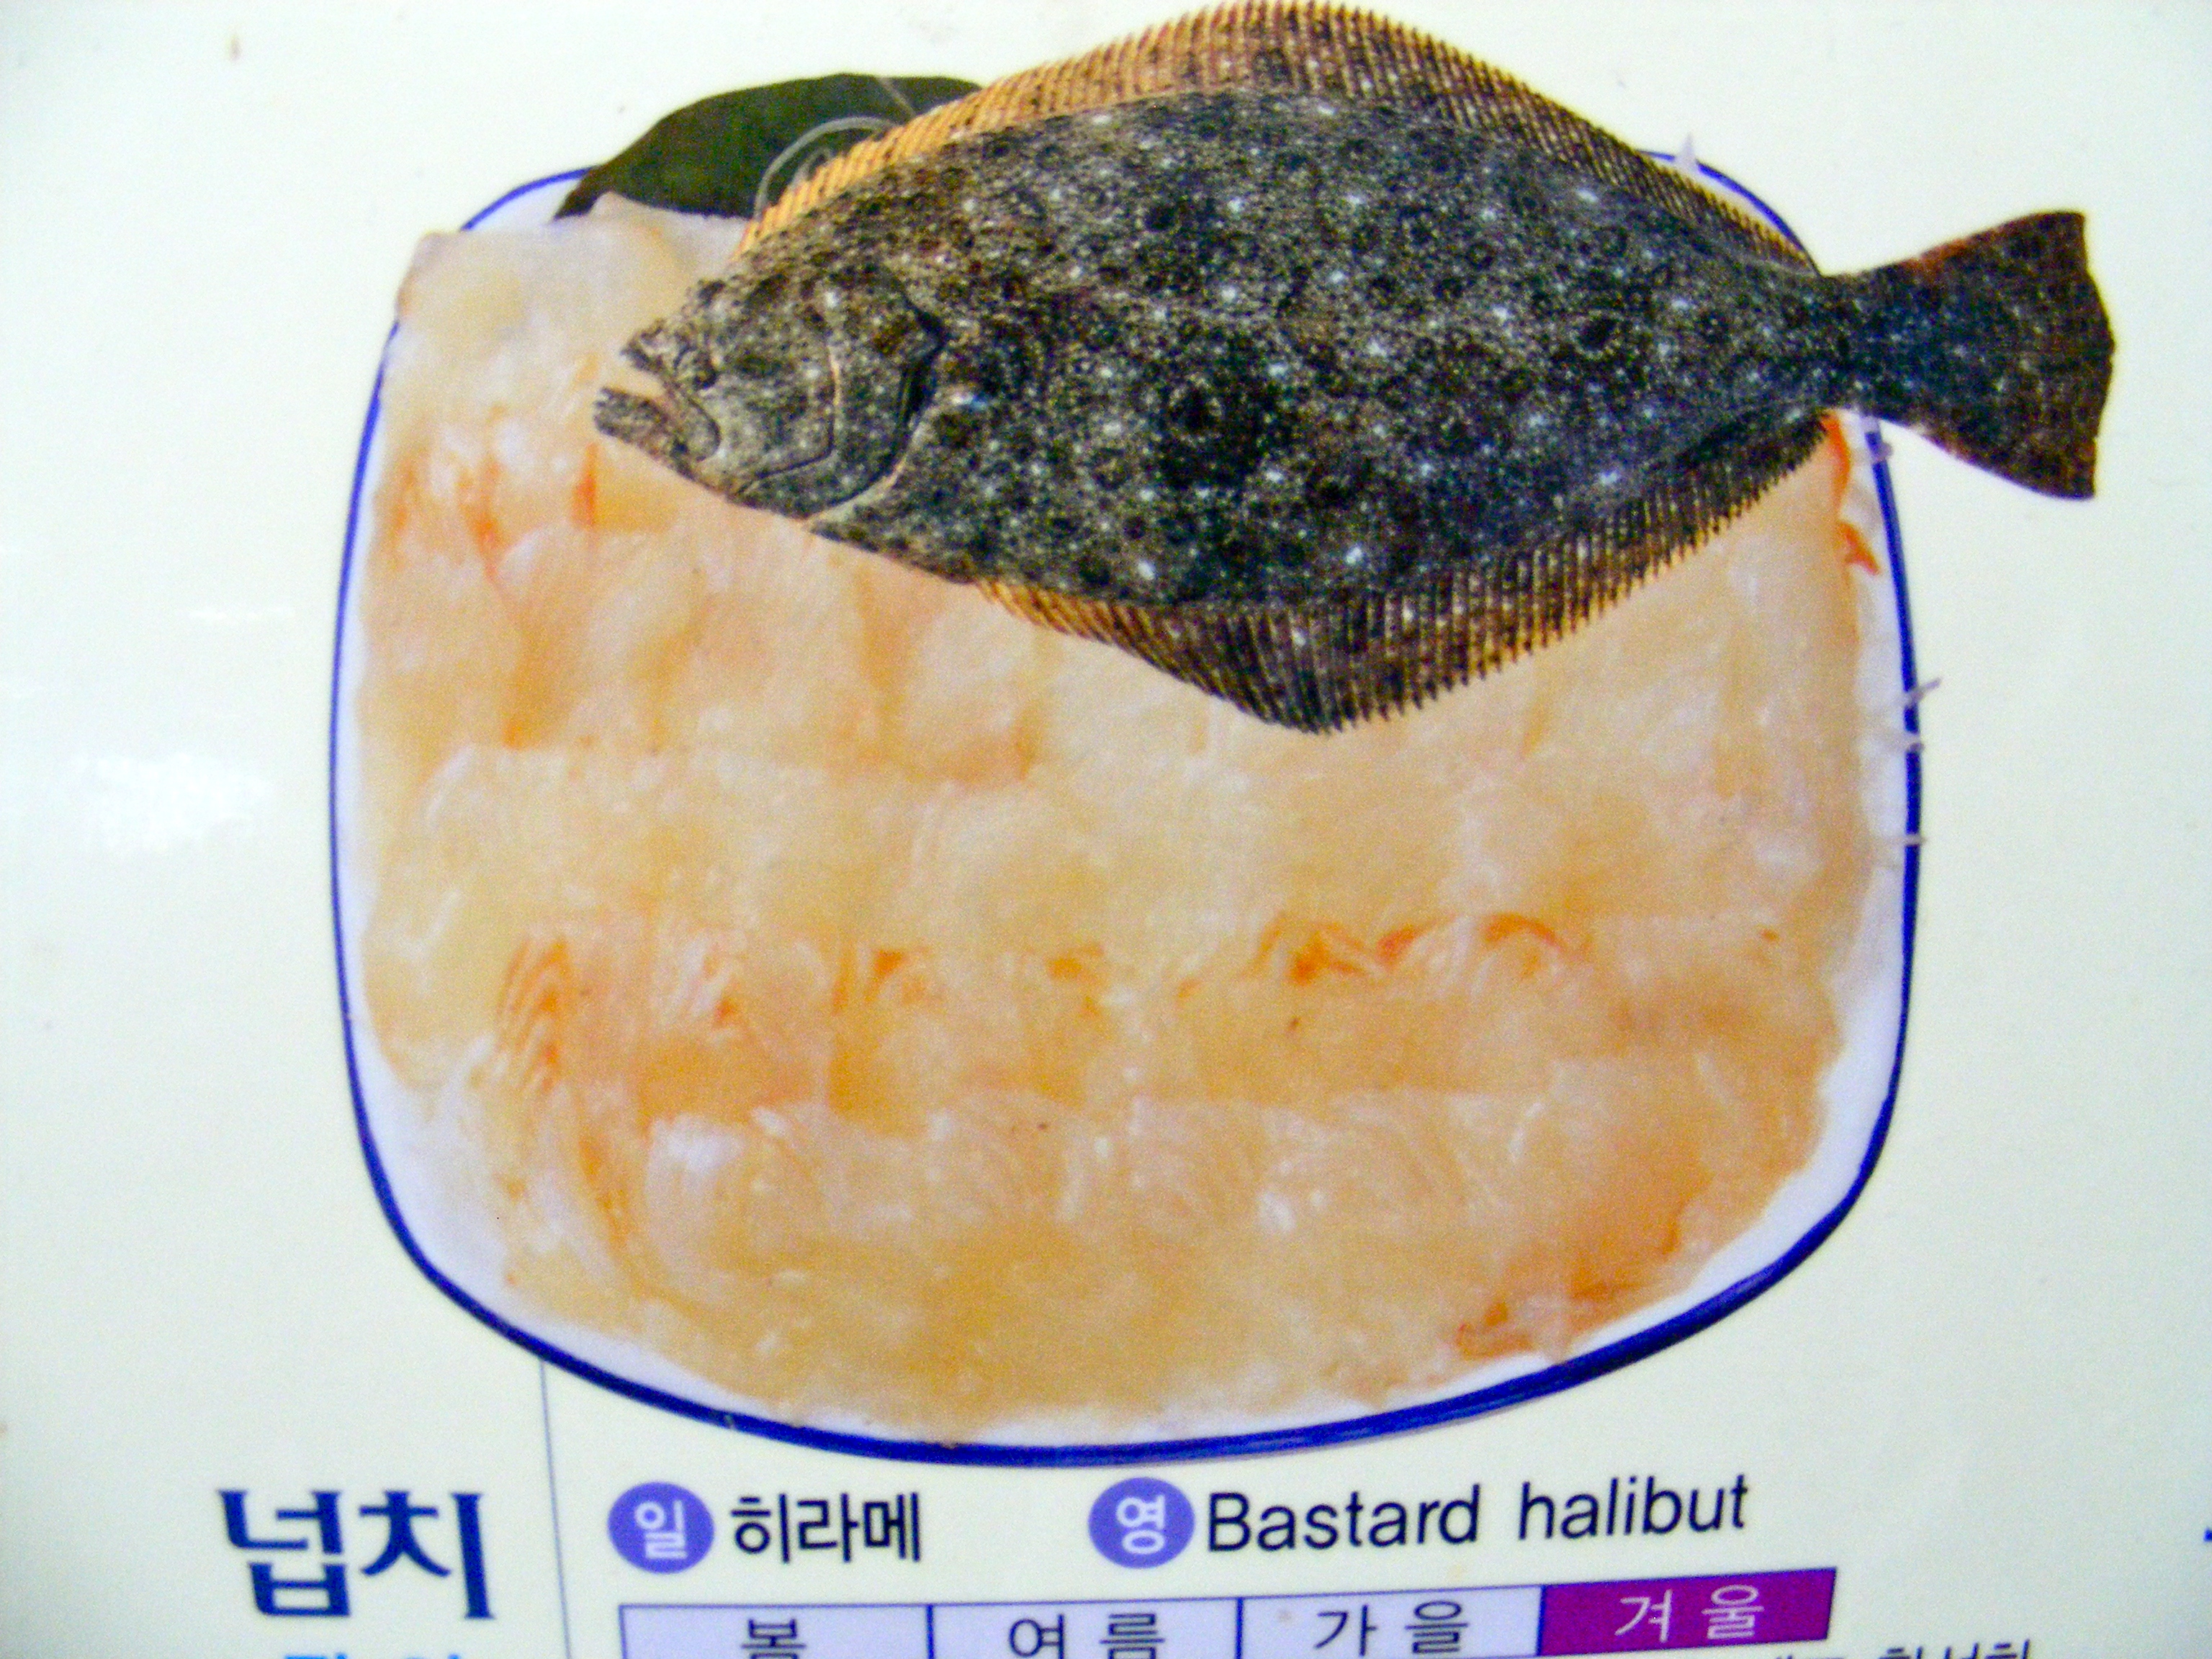 Bastard halibut 'engrish' sign